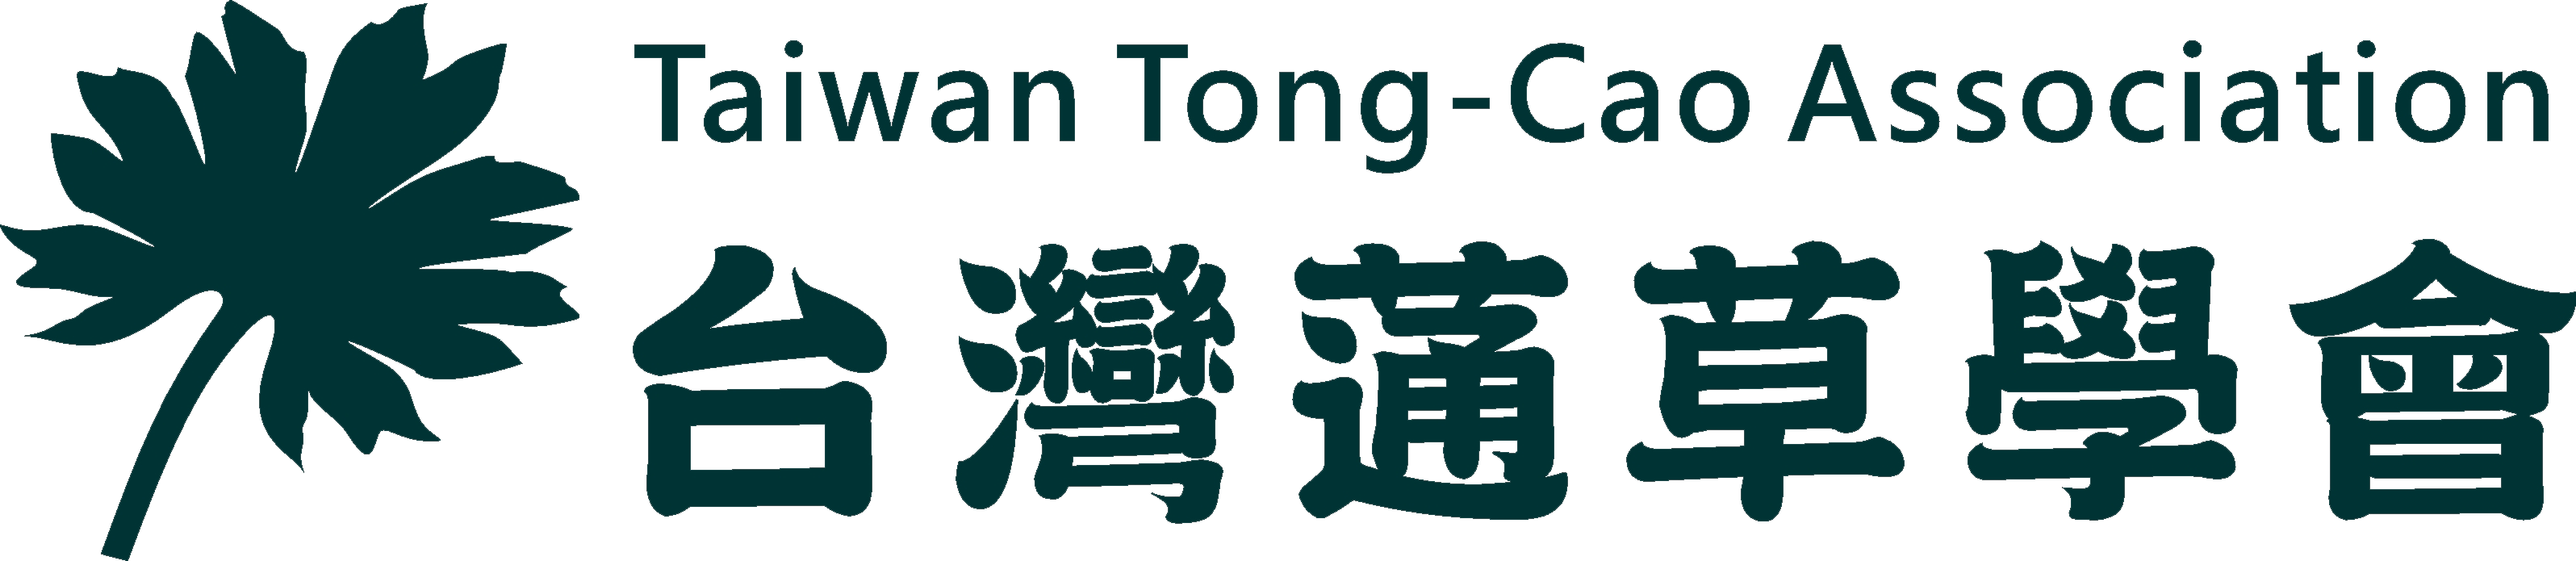 台灣蓪草學會 Taiwan Tong-Cao Association(TTCA)